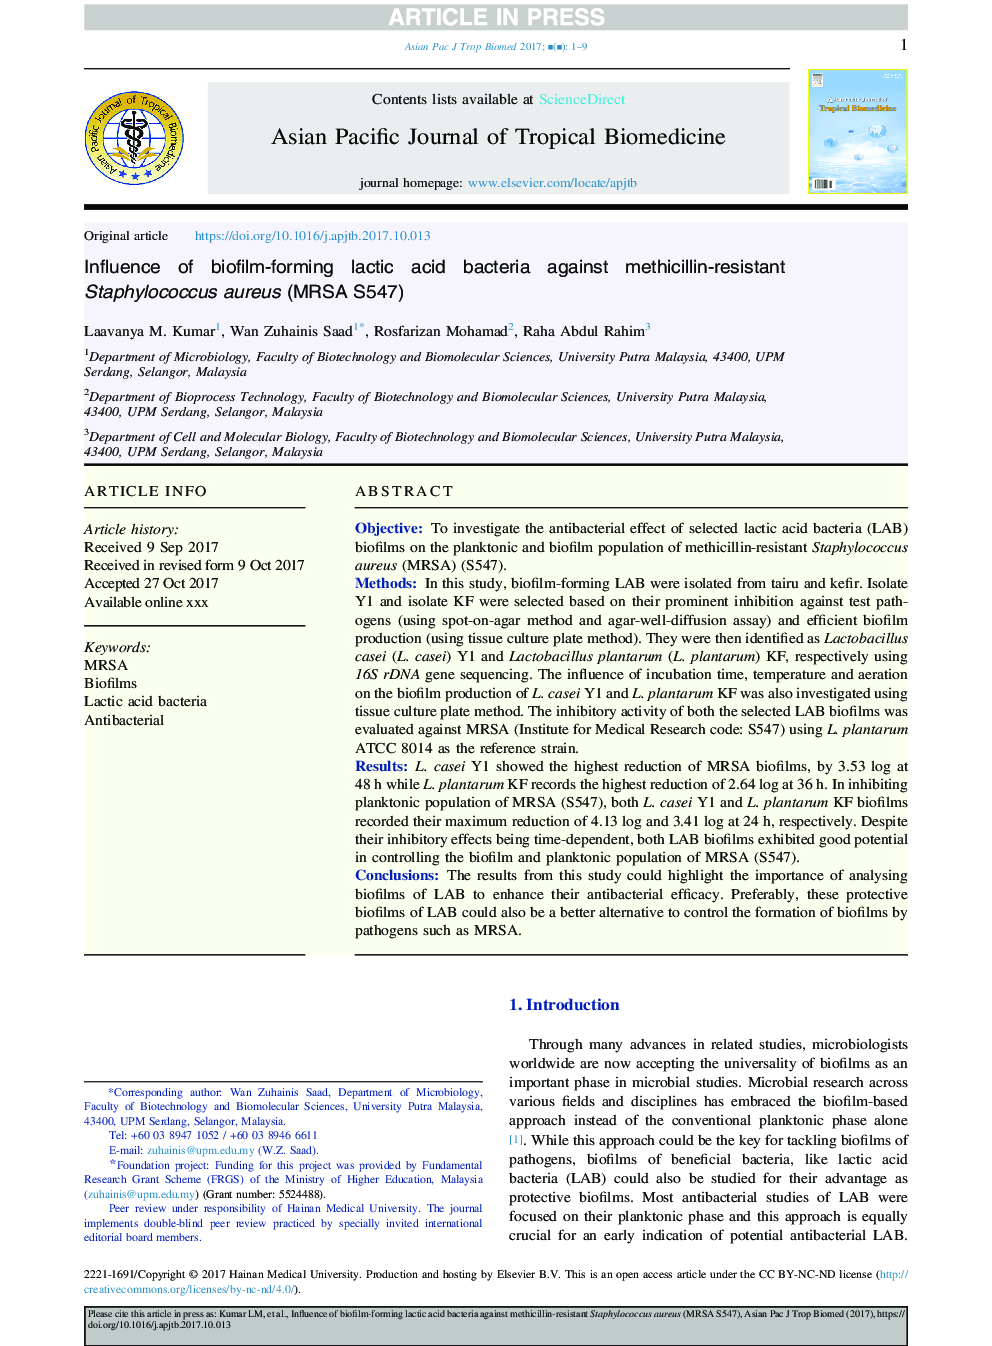 Influence of biofilm-forming lactic acid bacteria against methicillin-resistant Staphylococcus aureus (MRSA S547)